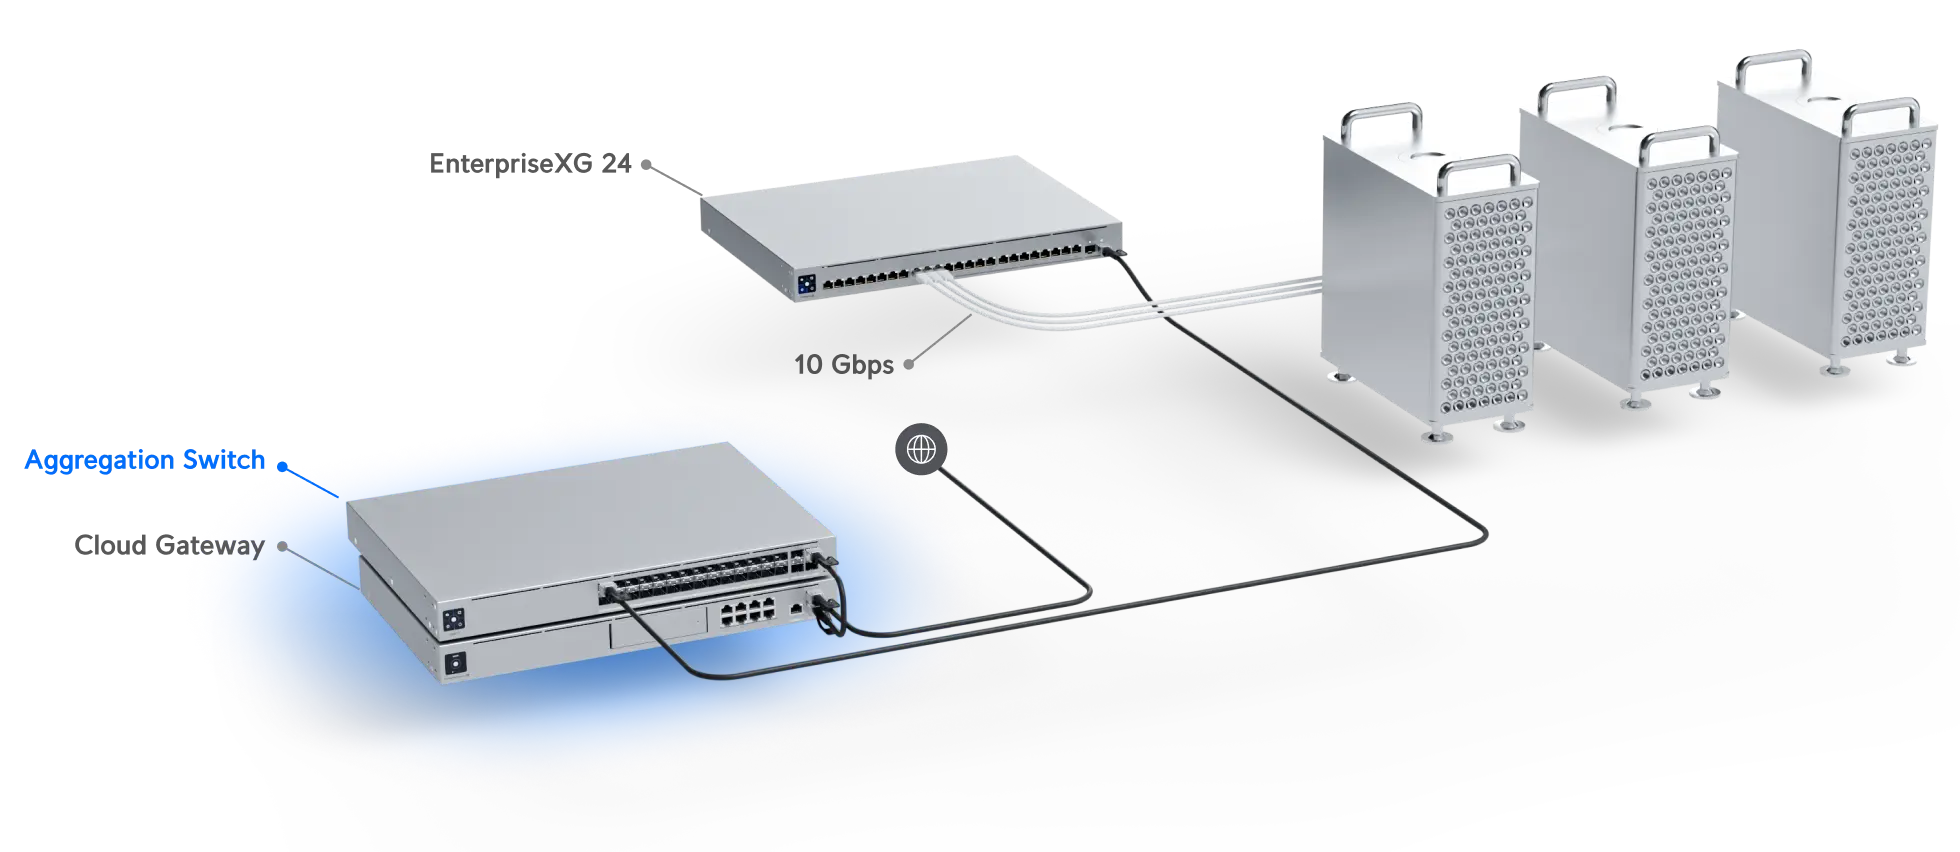 Ubiquiti Networks UniFi 8-Port 10G SFP+ Managed Aggregation Switch